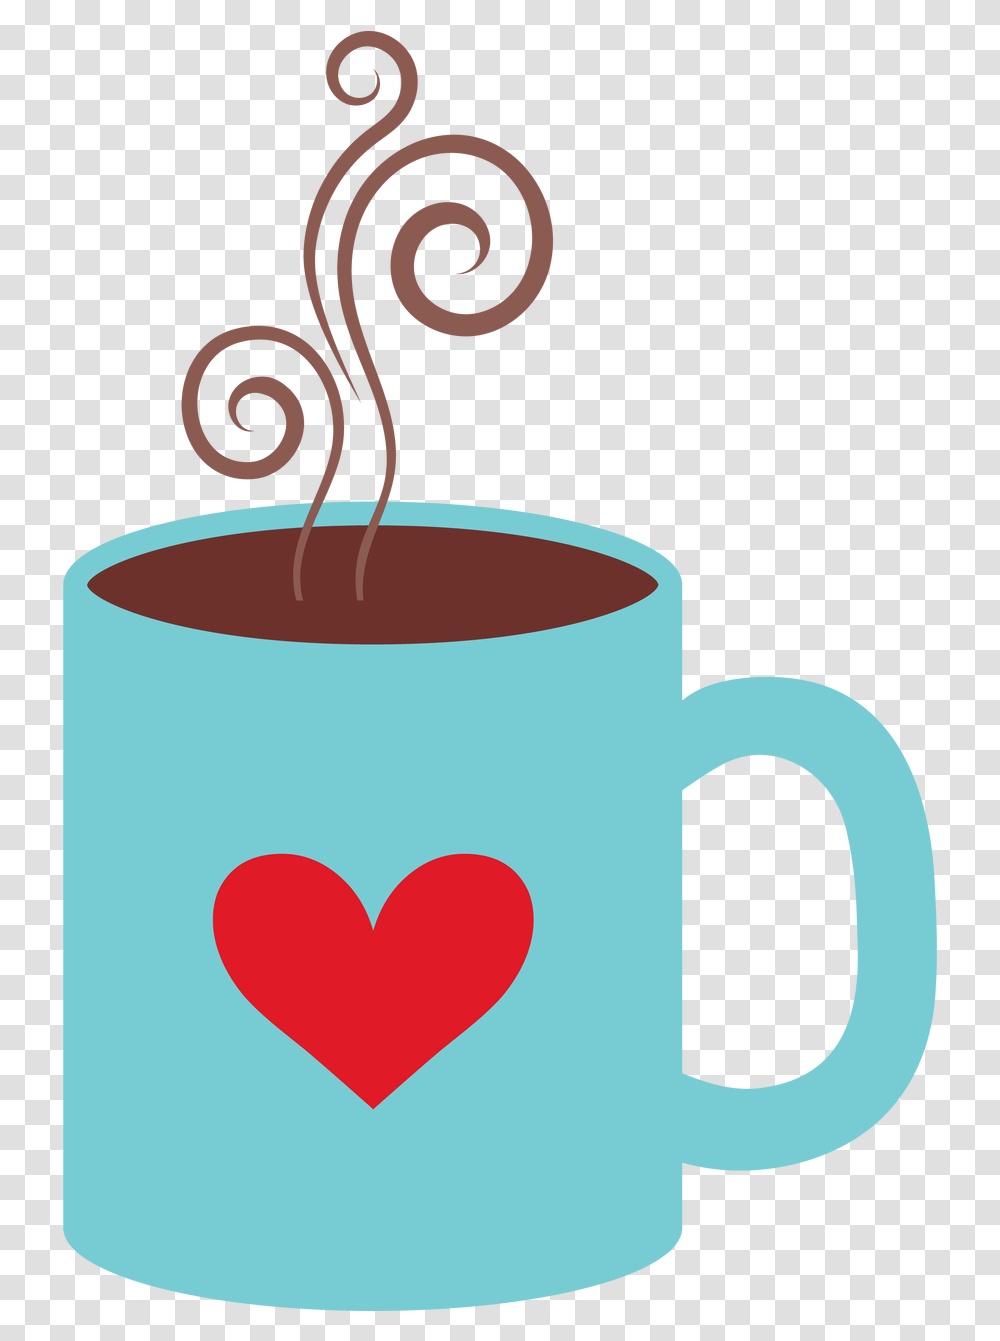 Hot Chocolate Mug Svg Cut File Coffee Cup, Heart, Latte, Beverage, Drink Transparent Png